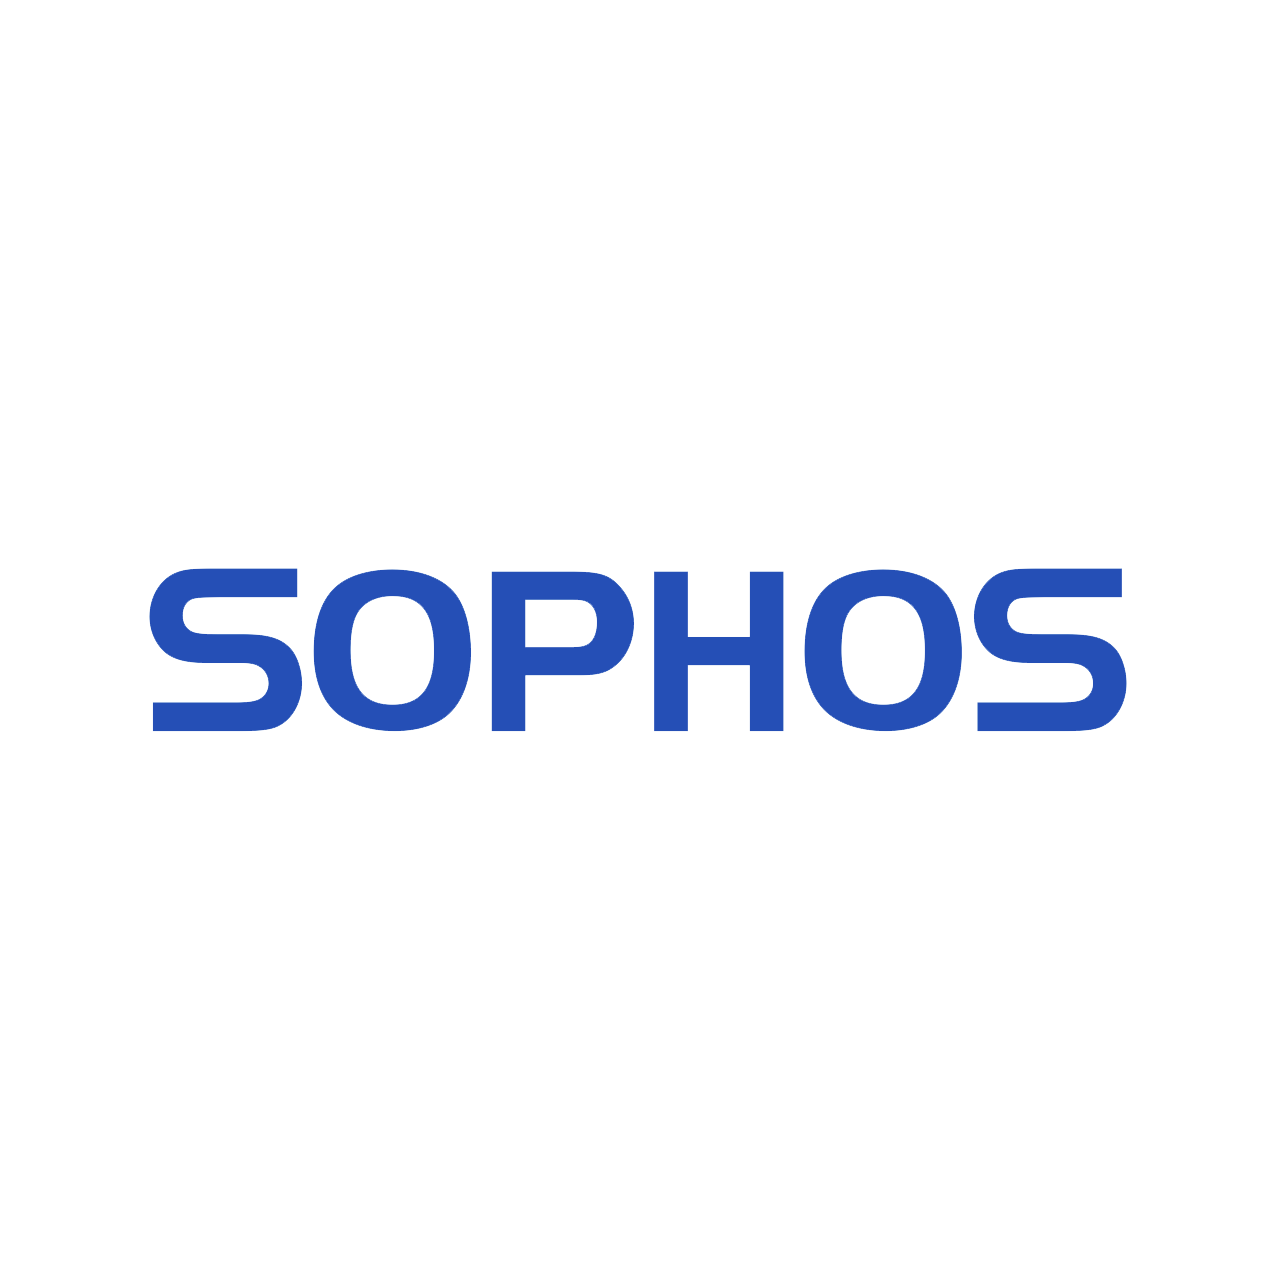 Sophos-ATC-LogoSQ